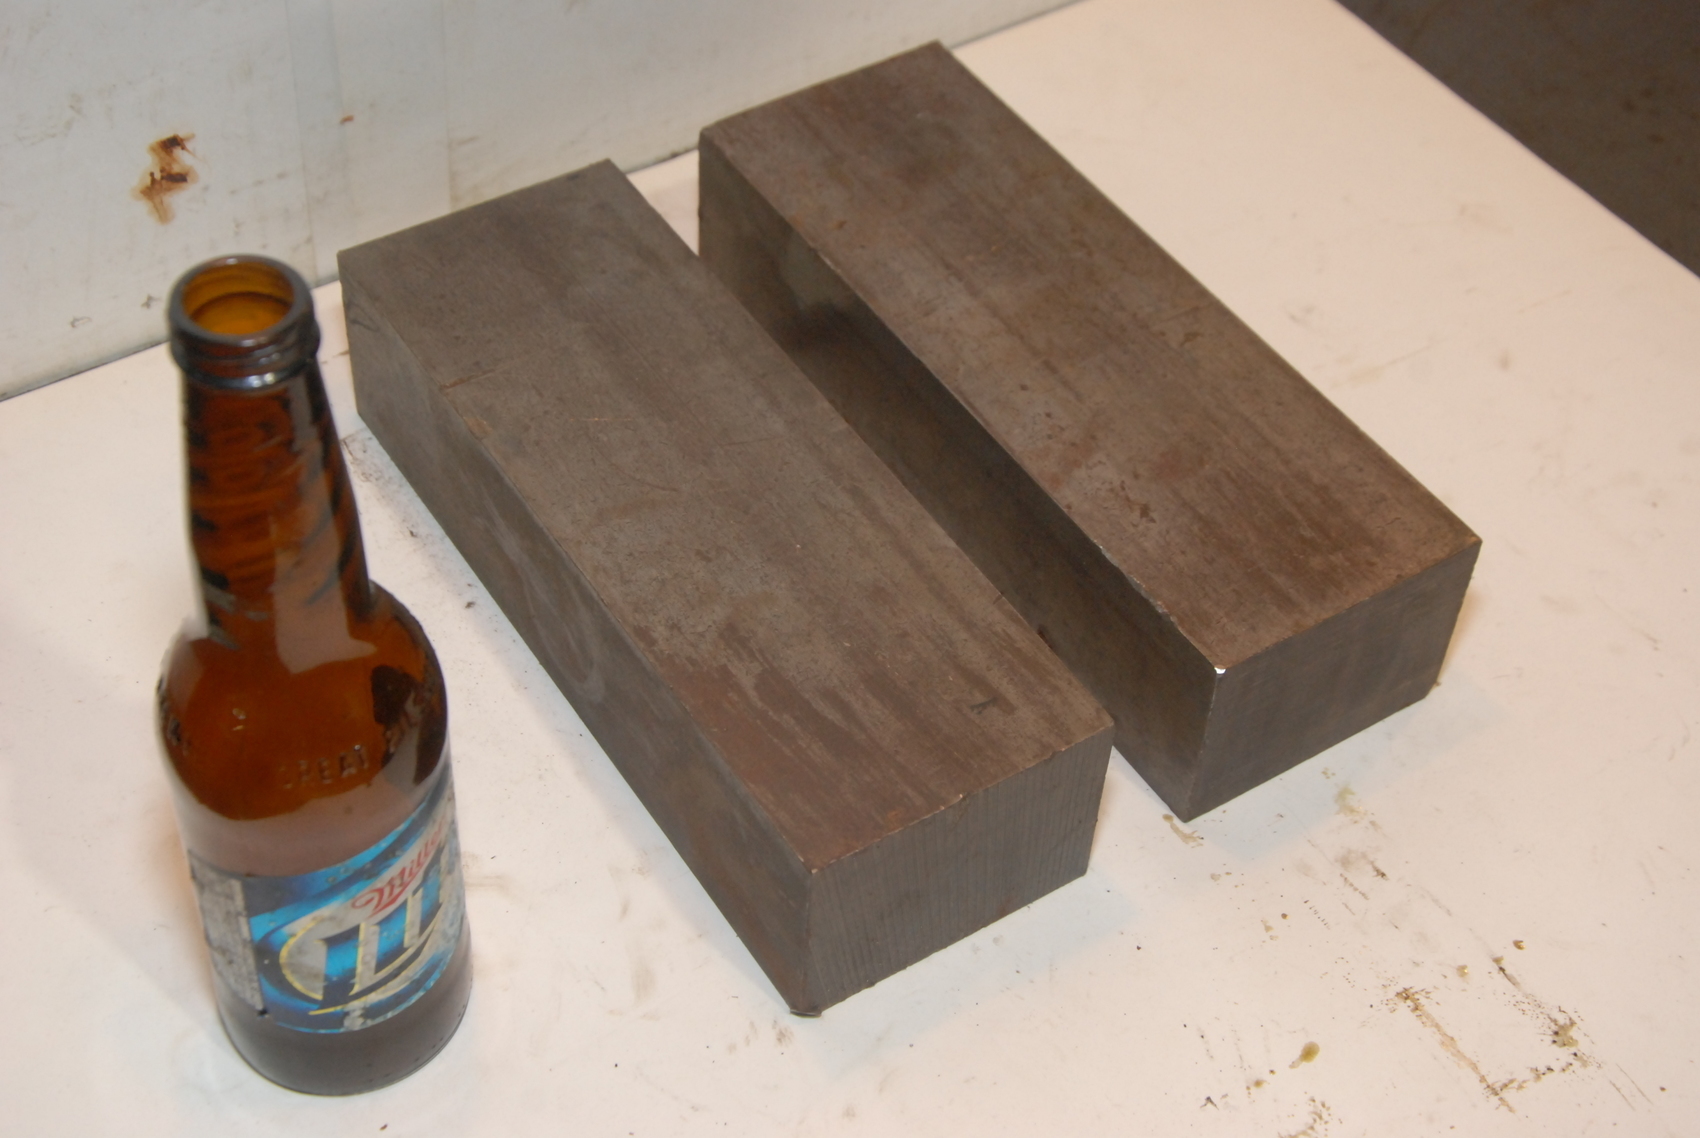 Lot of 2 steel Rectangular Bar for blacksmith anvil,10*3.5*2.5,49lbs